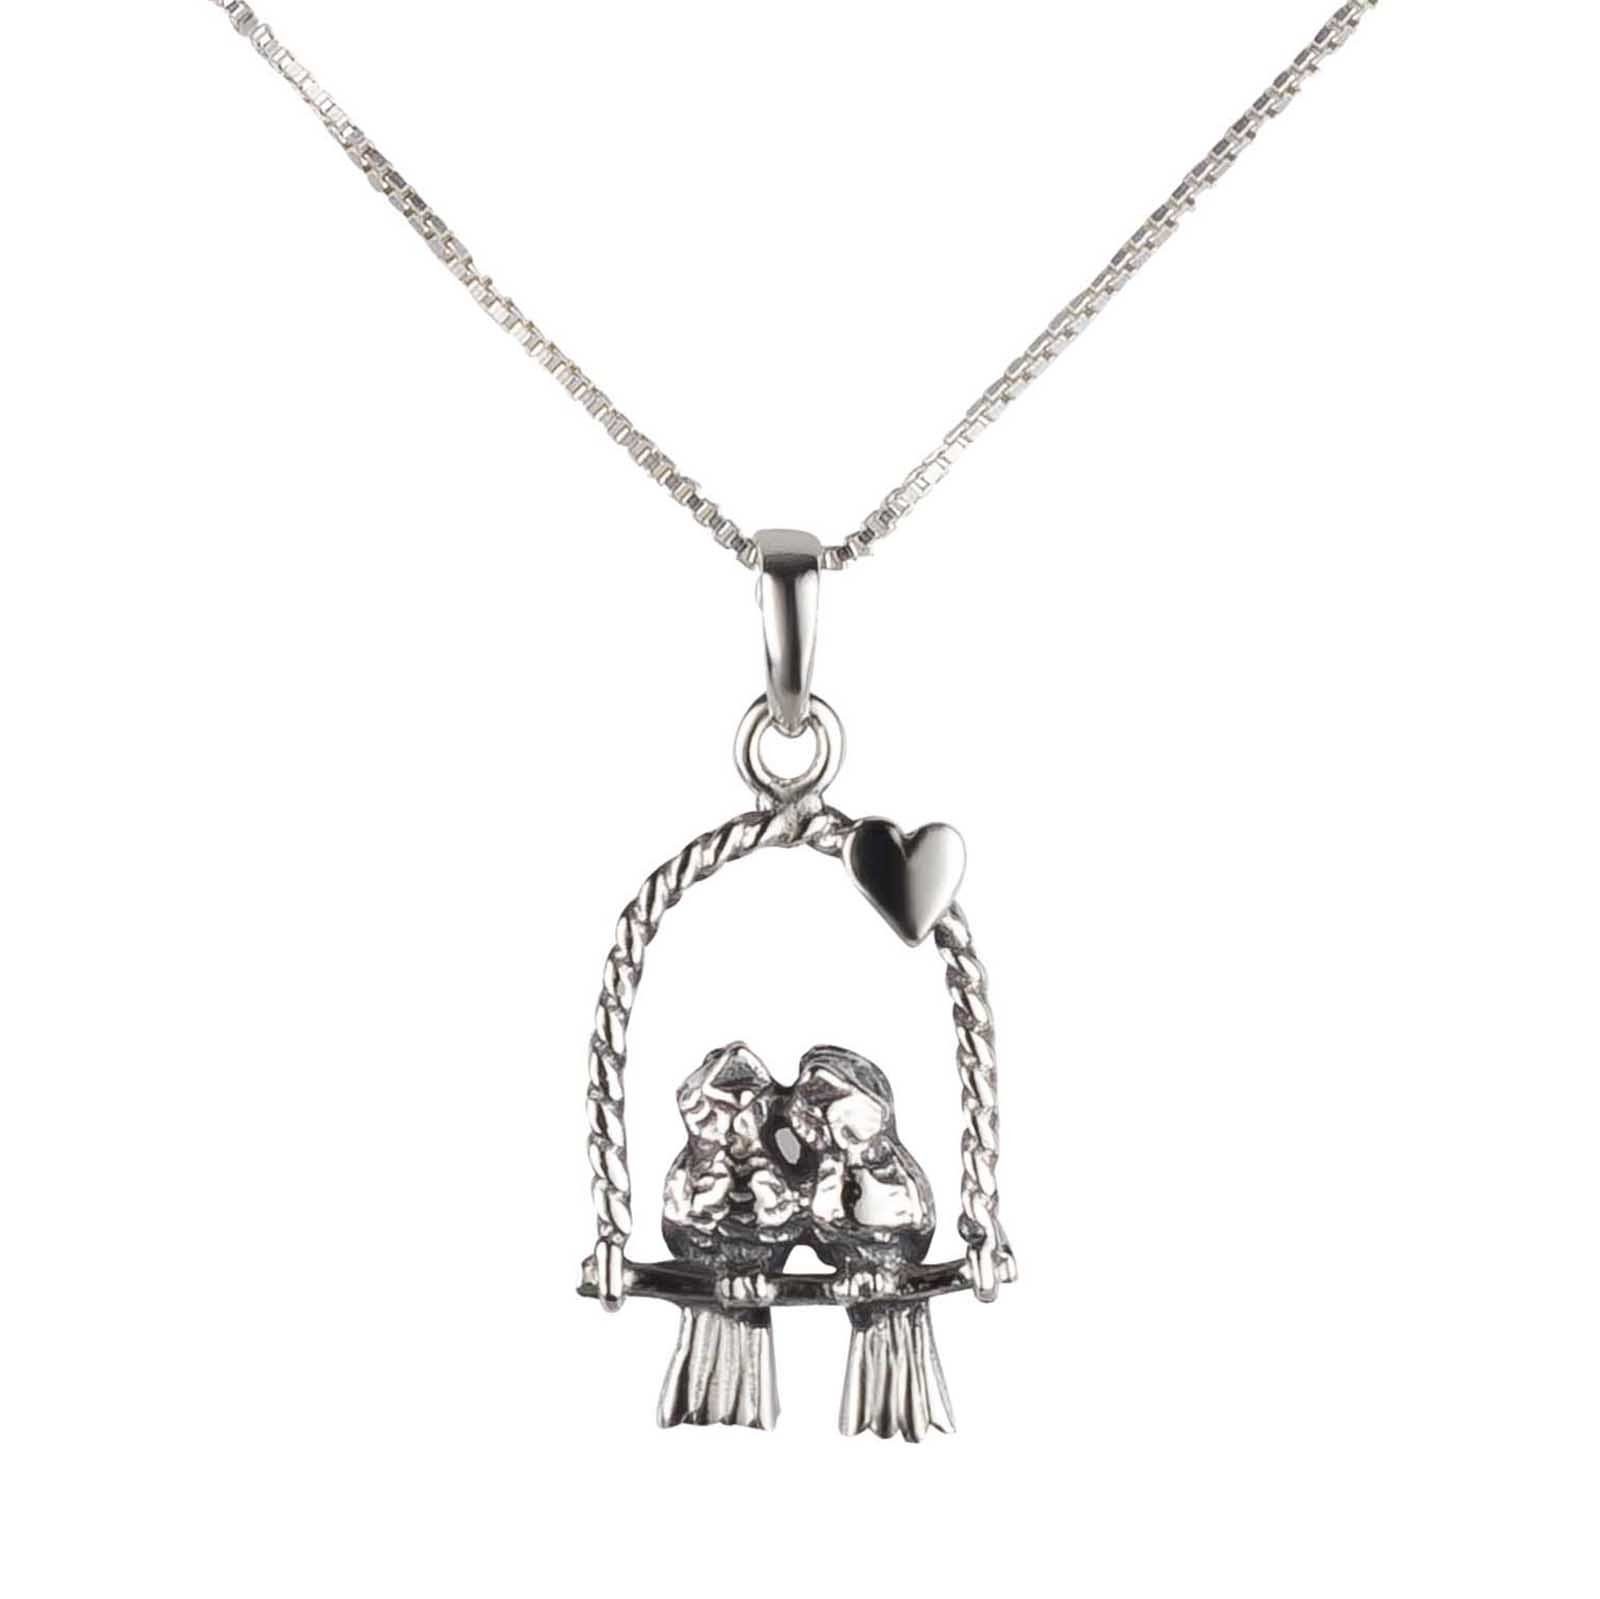 Halskette Silberanhänger Anhänger), Kinderschmuck schmuck23 mit Kettenanhänger (Halskette Kettenanhänger